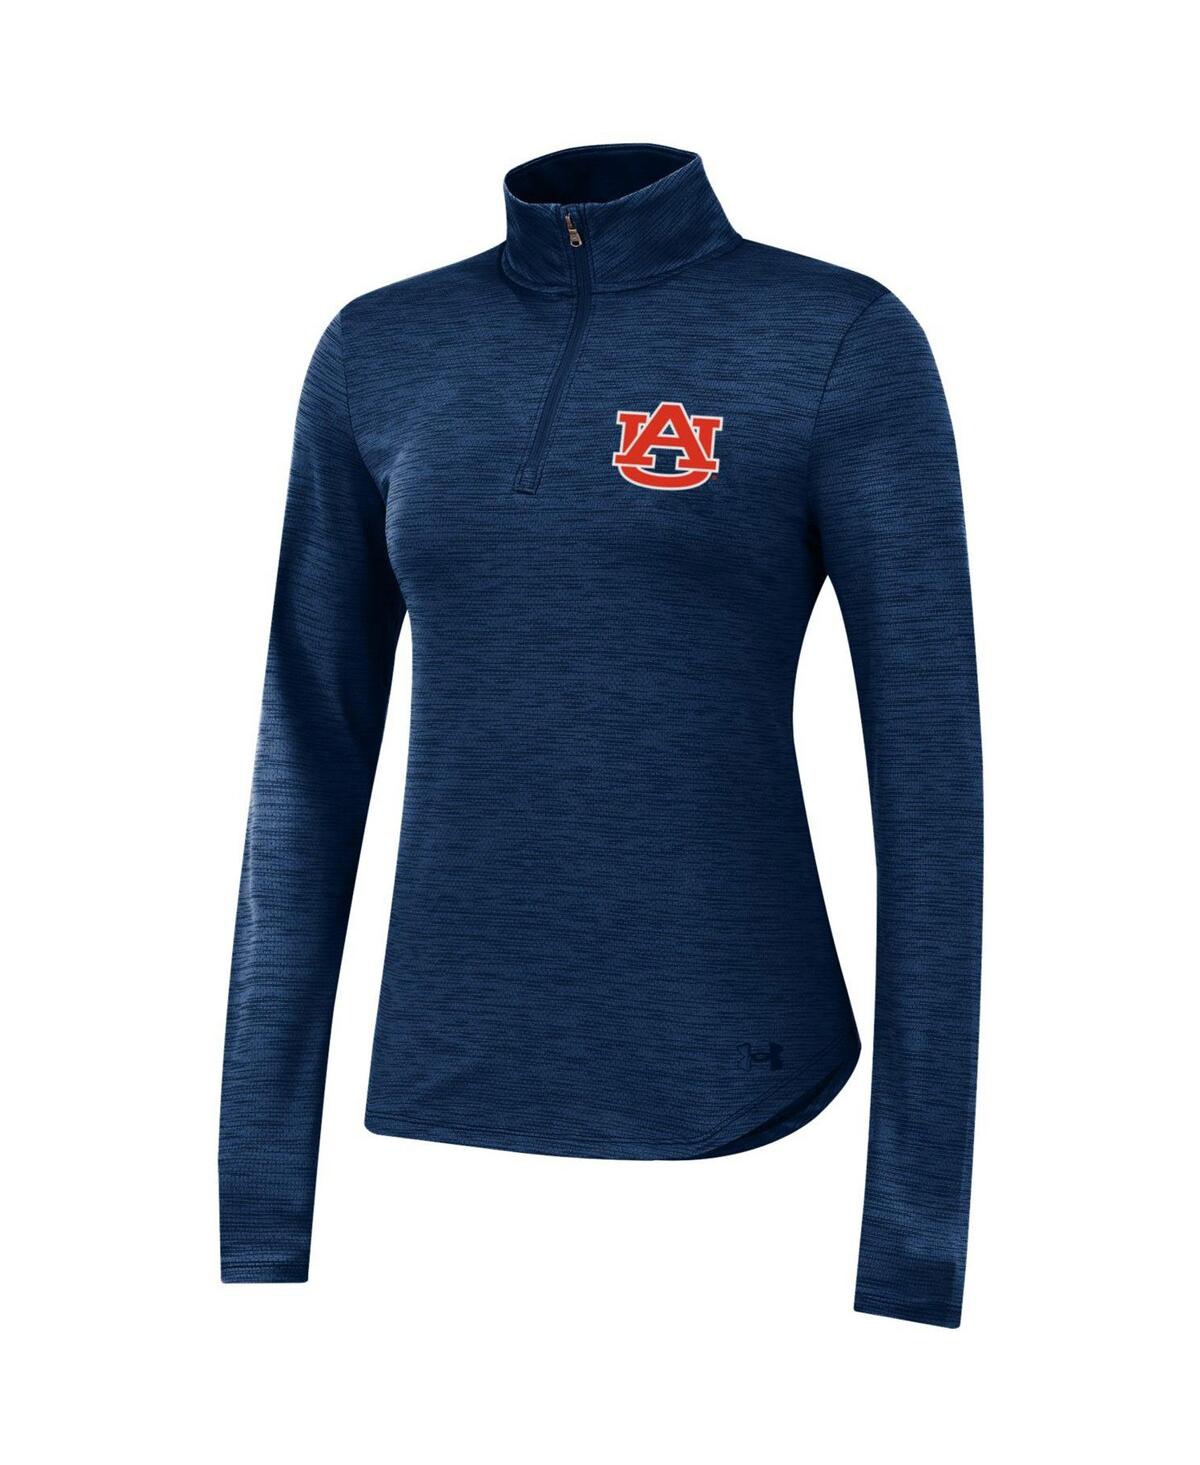 Shop Under Armour Women's  Navy Auburn Tigers Vent Space-dye Performance Quarter-zip Jacket